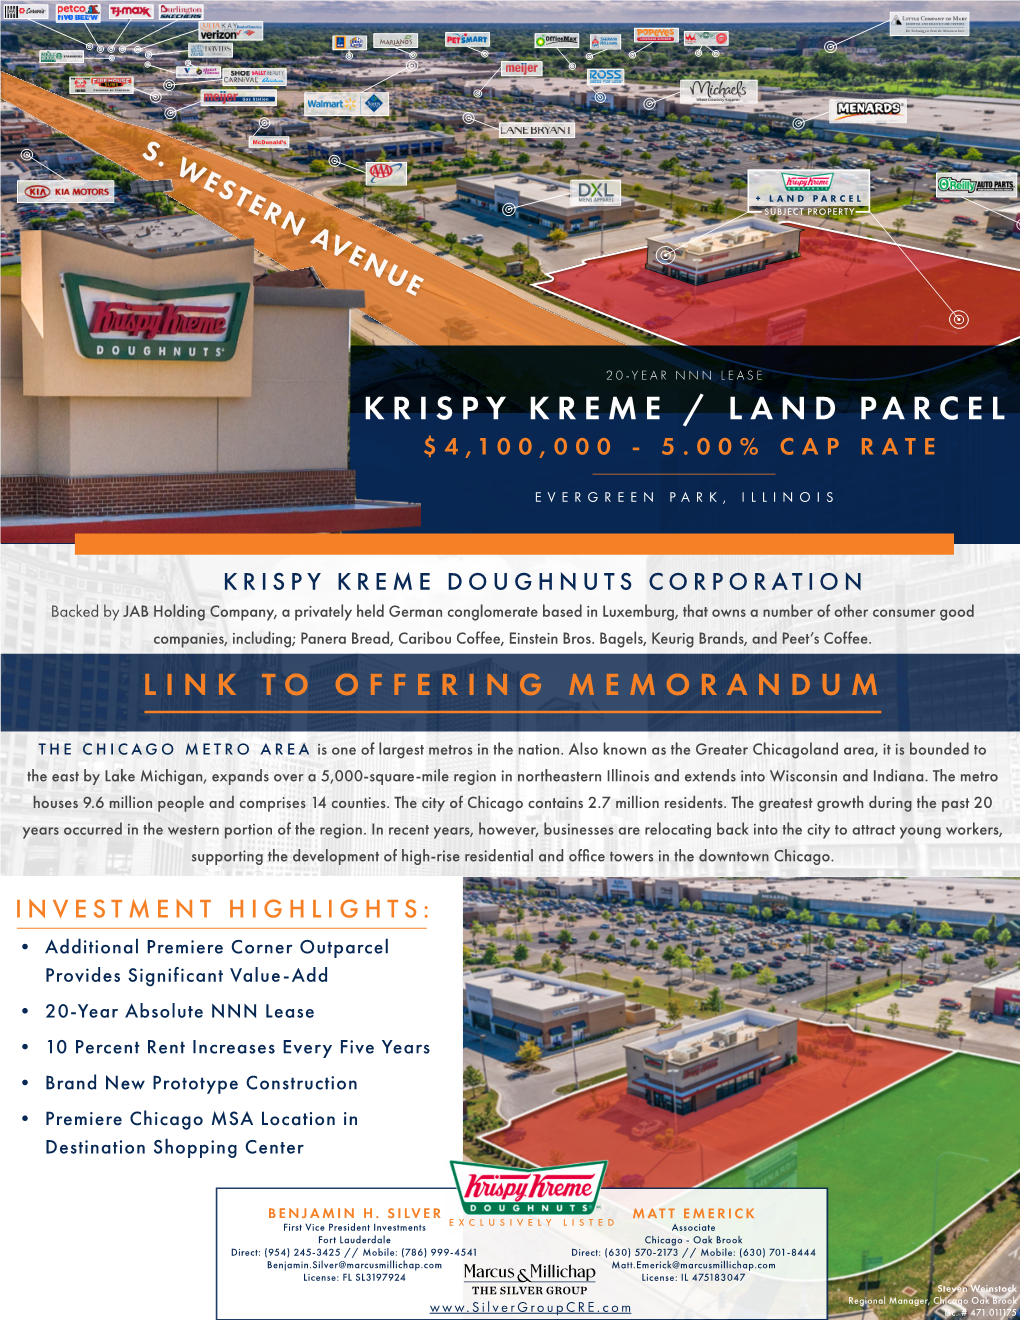 Krispy Kreme / Land Parcel $4,100,000 - 5.00% Cap Rate